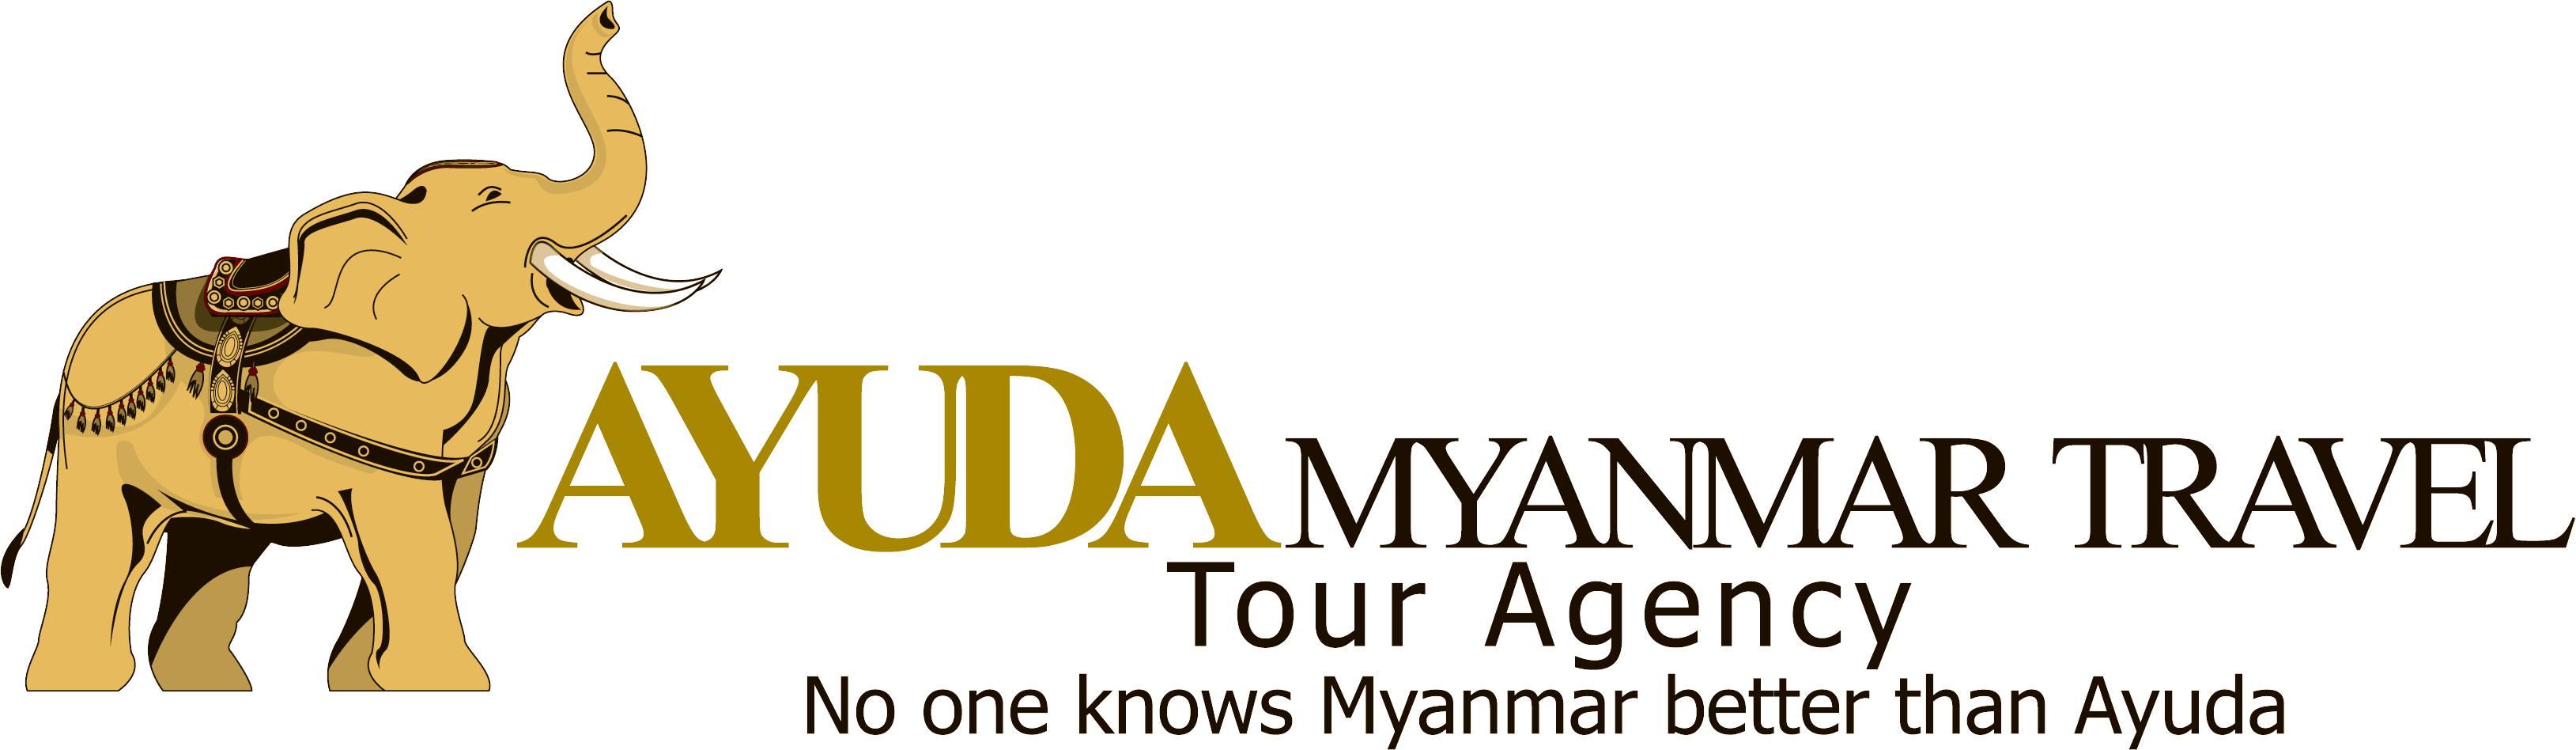 Ayuda Myanmar Travel Tour Agency